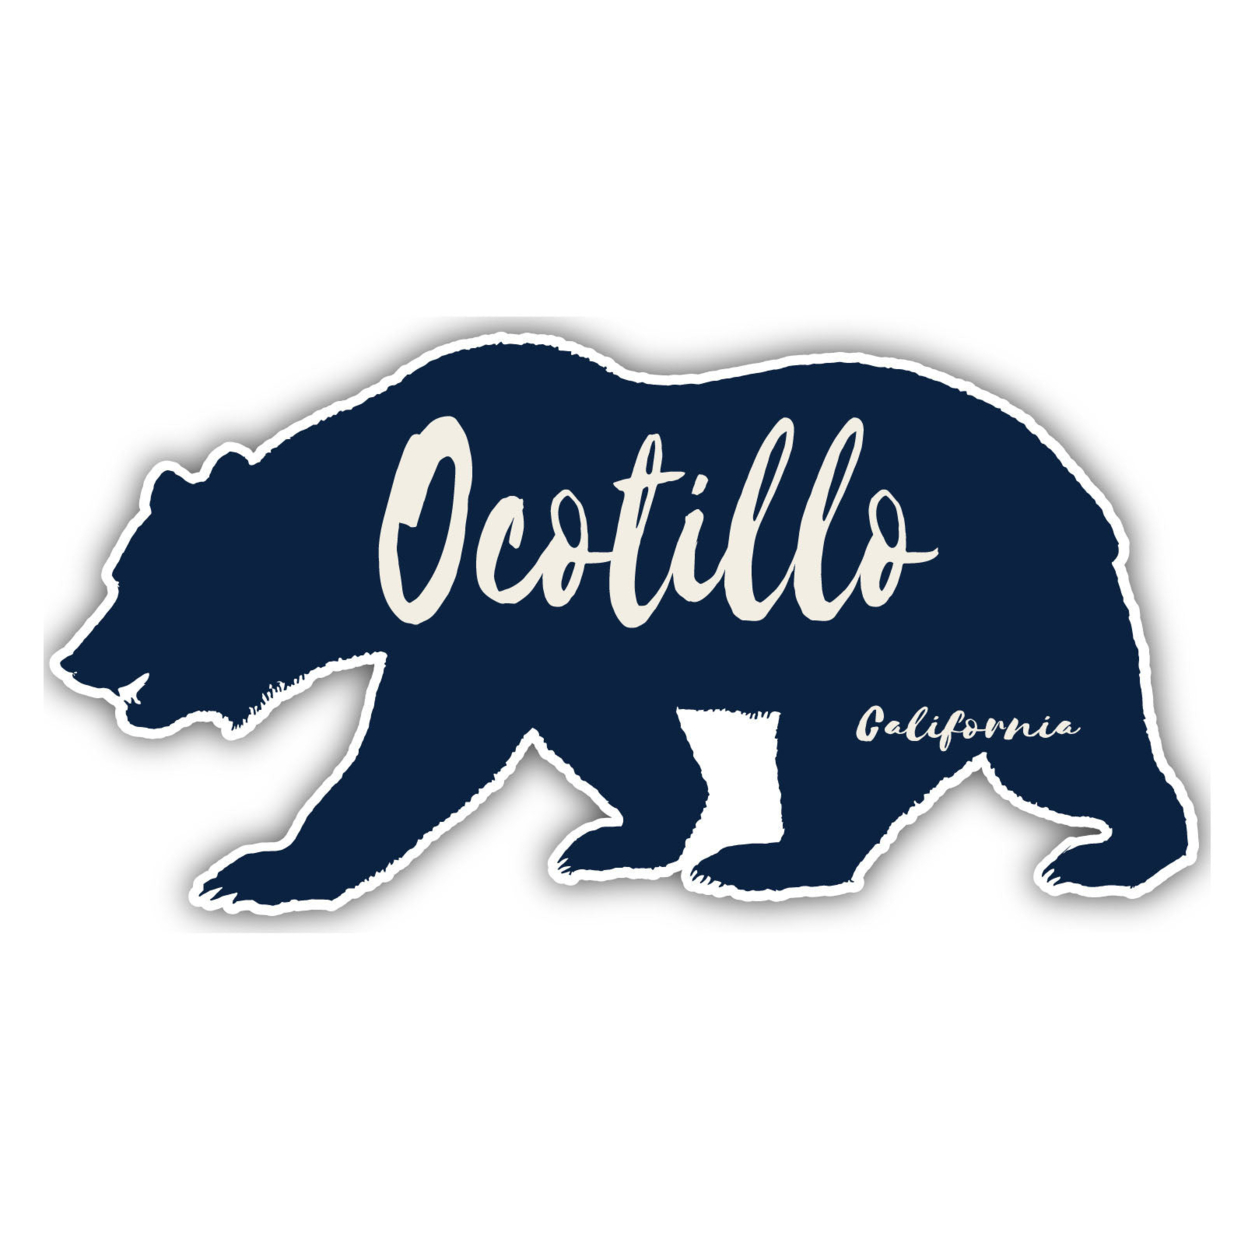 Ocotillo Wells California Souvenir Decorative Stickers (Choose Theme And Size) - Single Unit, 4-Inch, Bear